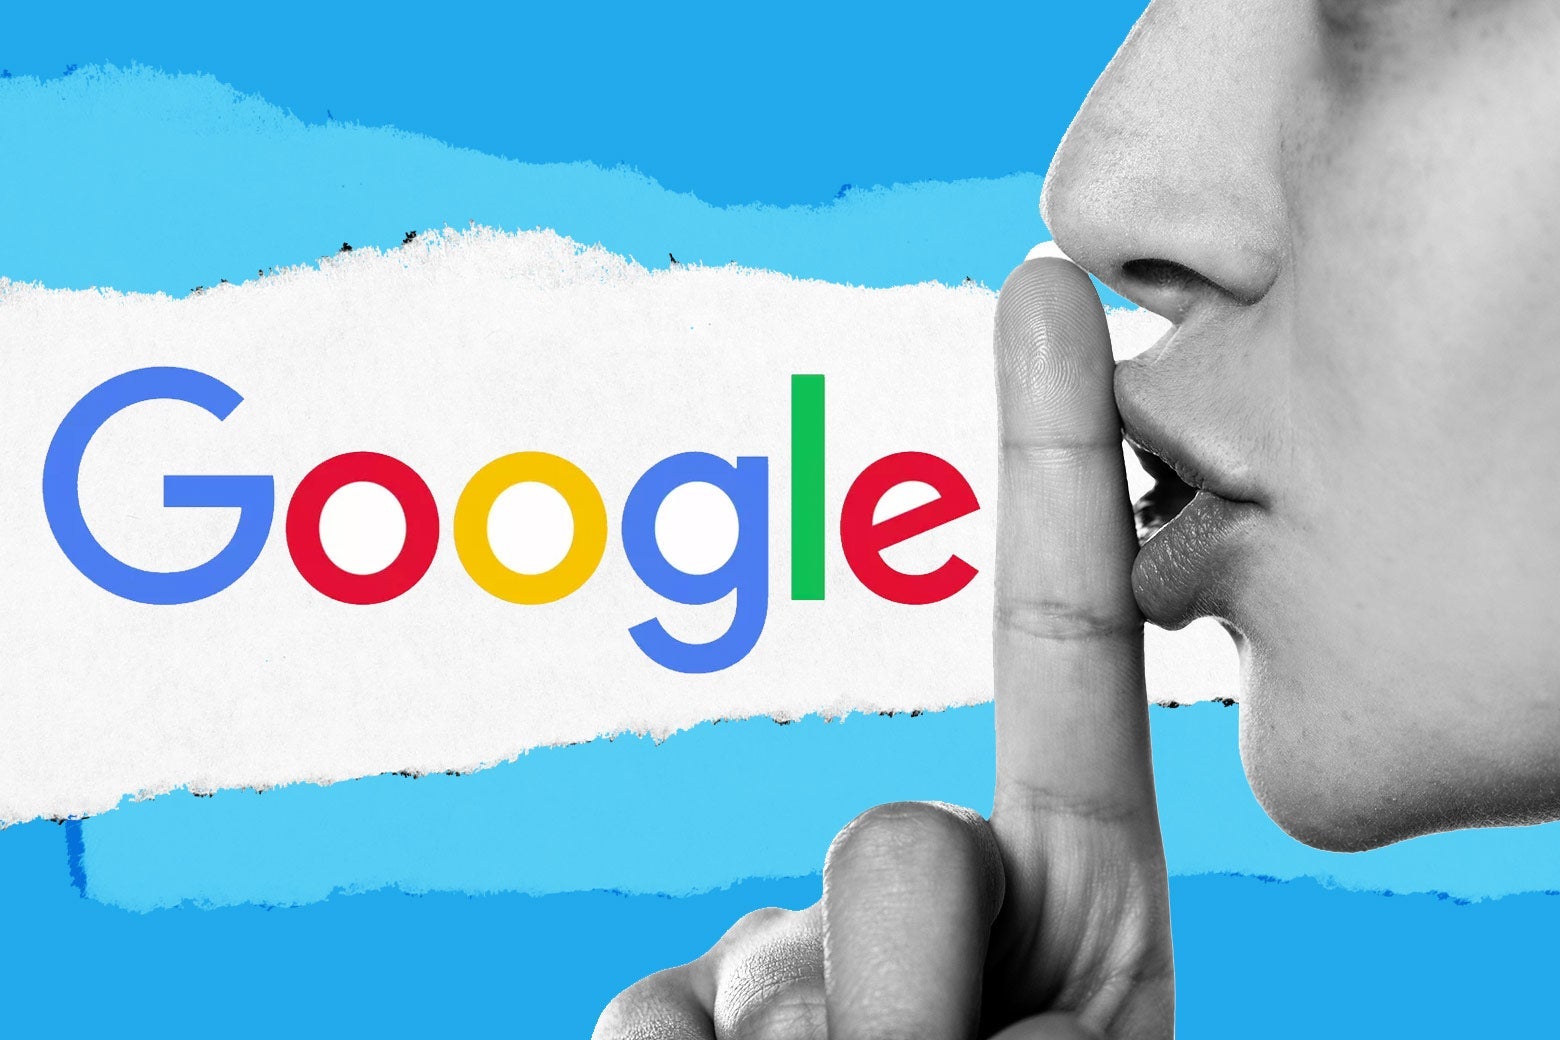 Photo illustration of a person shushing the Google logo.